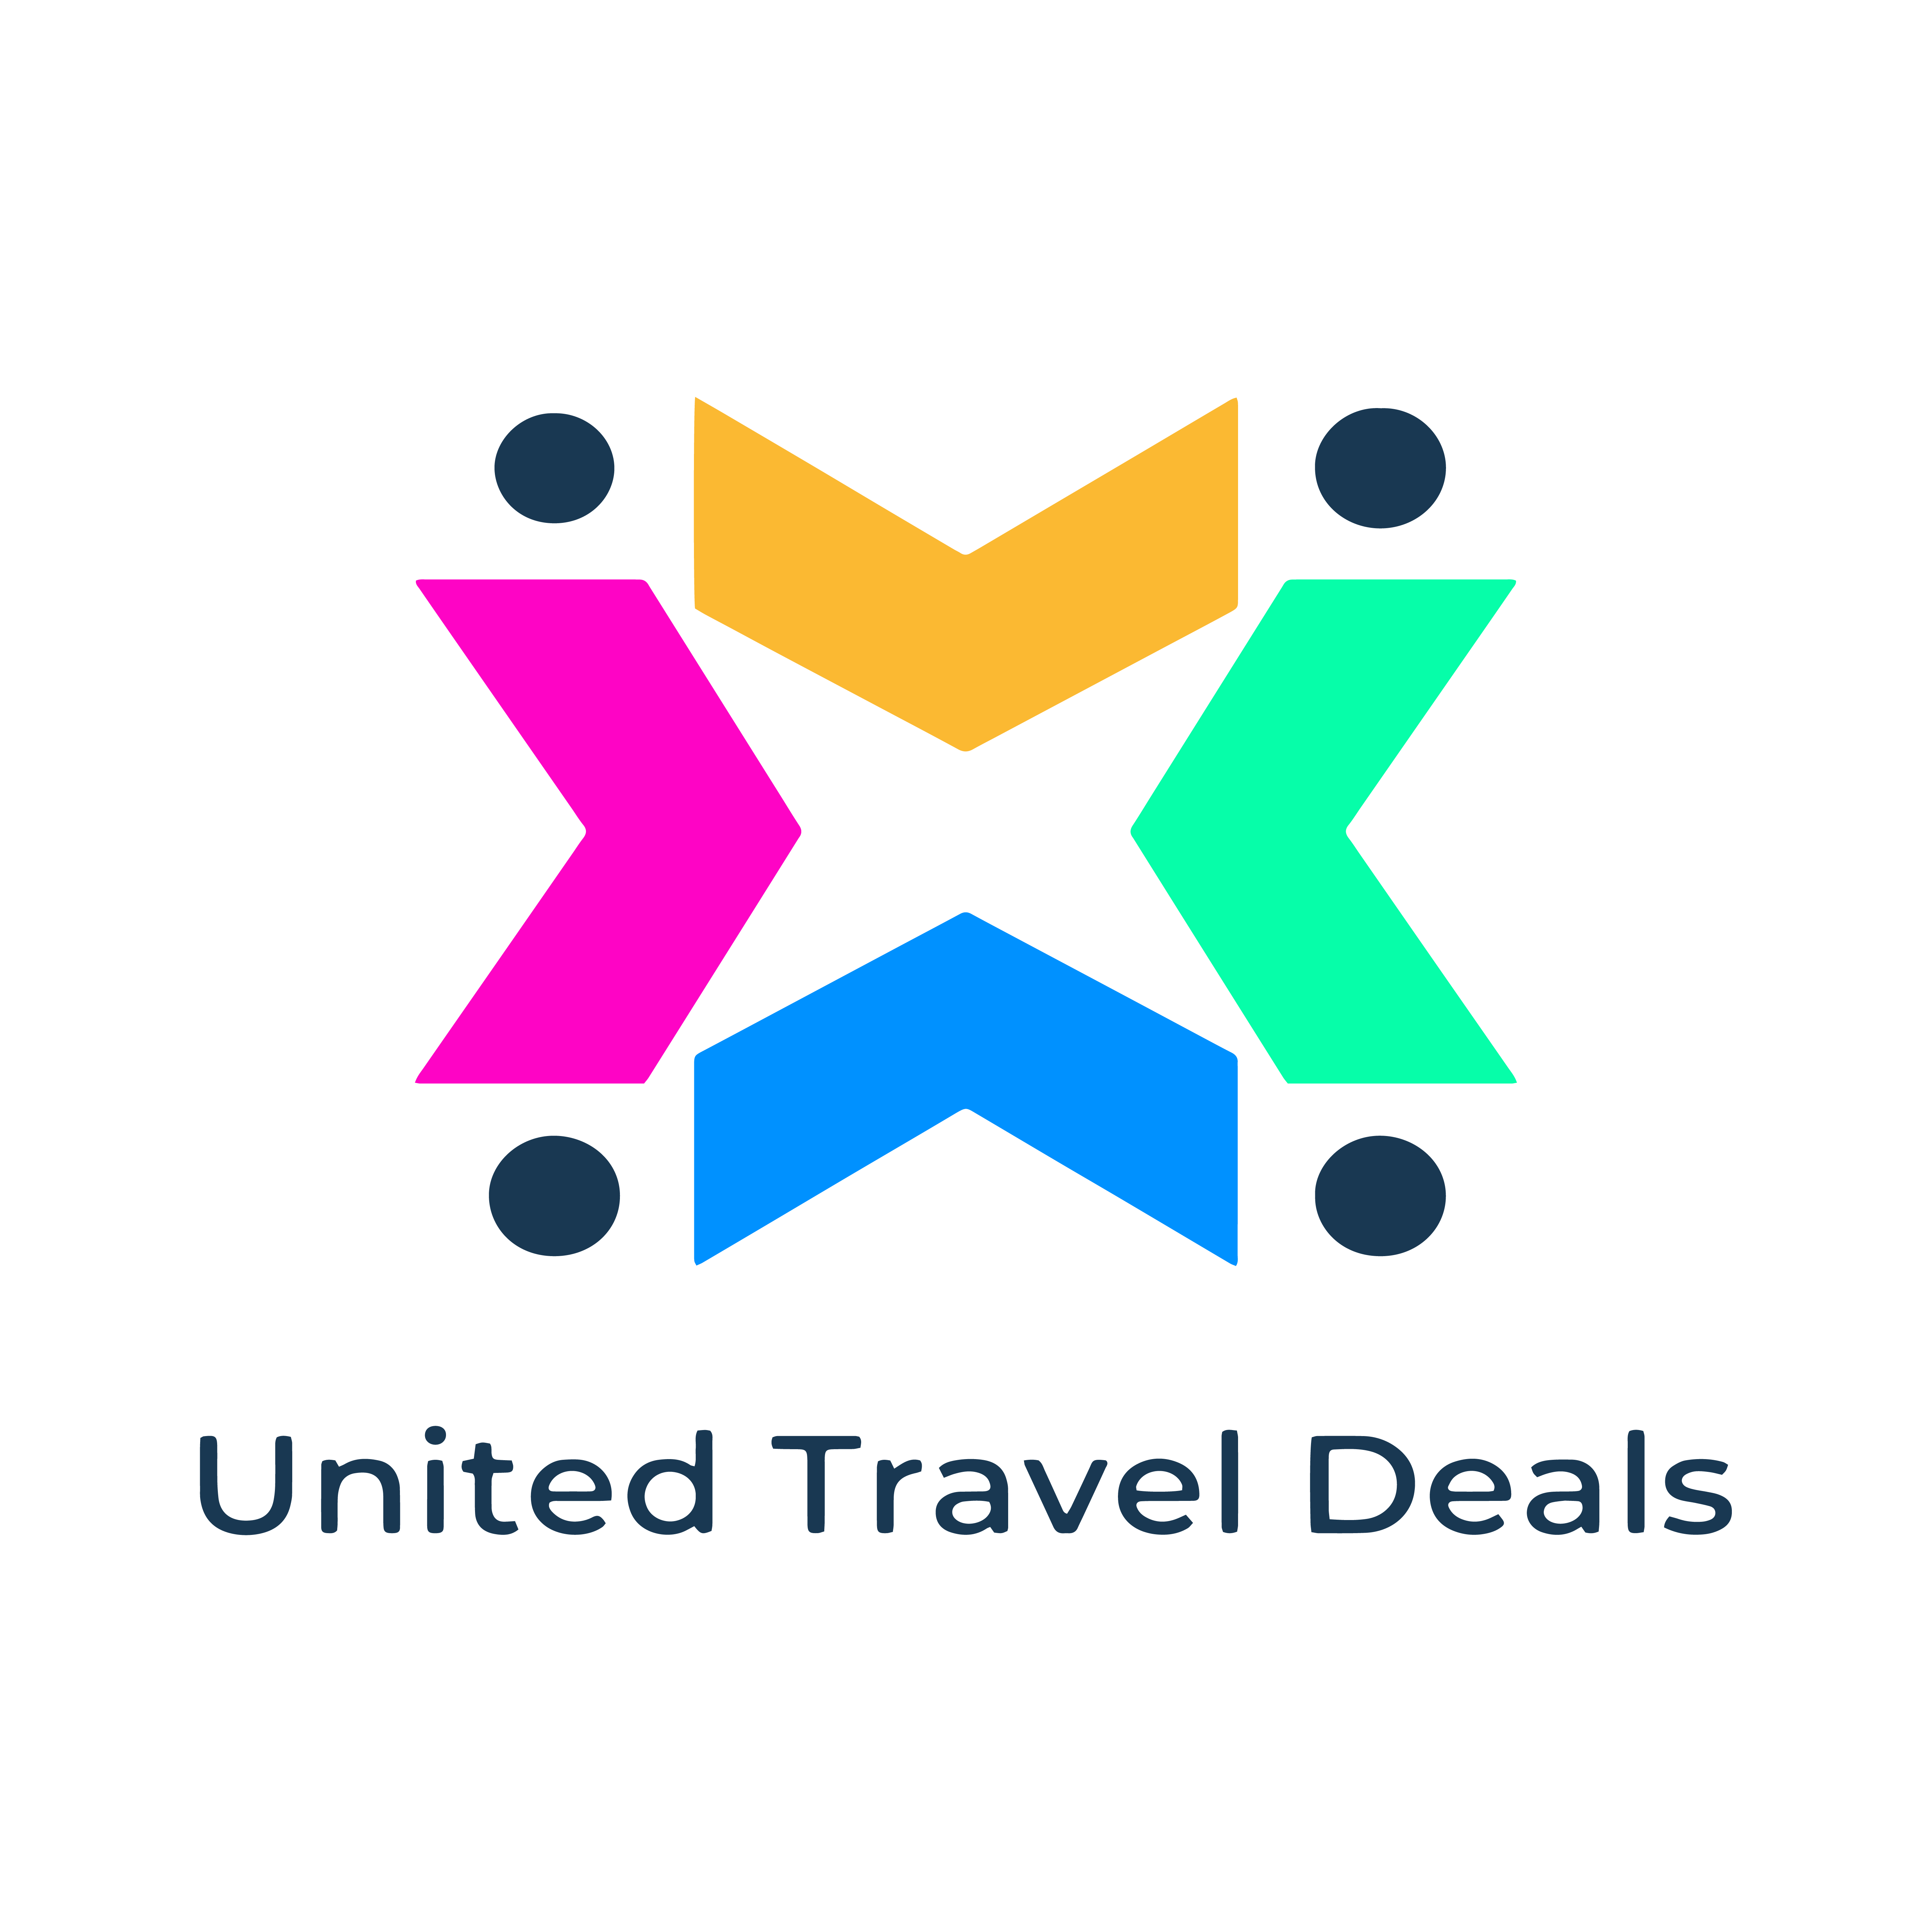 United Travel Deals